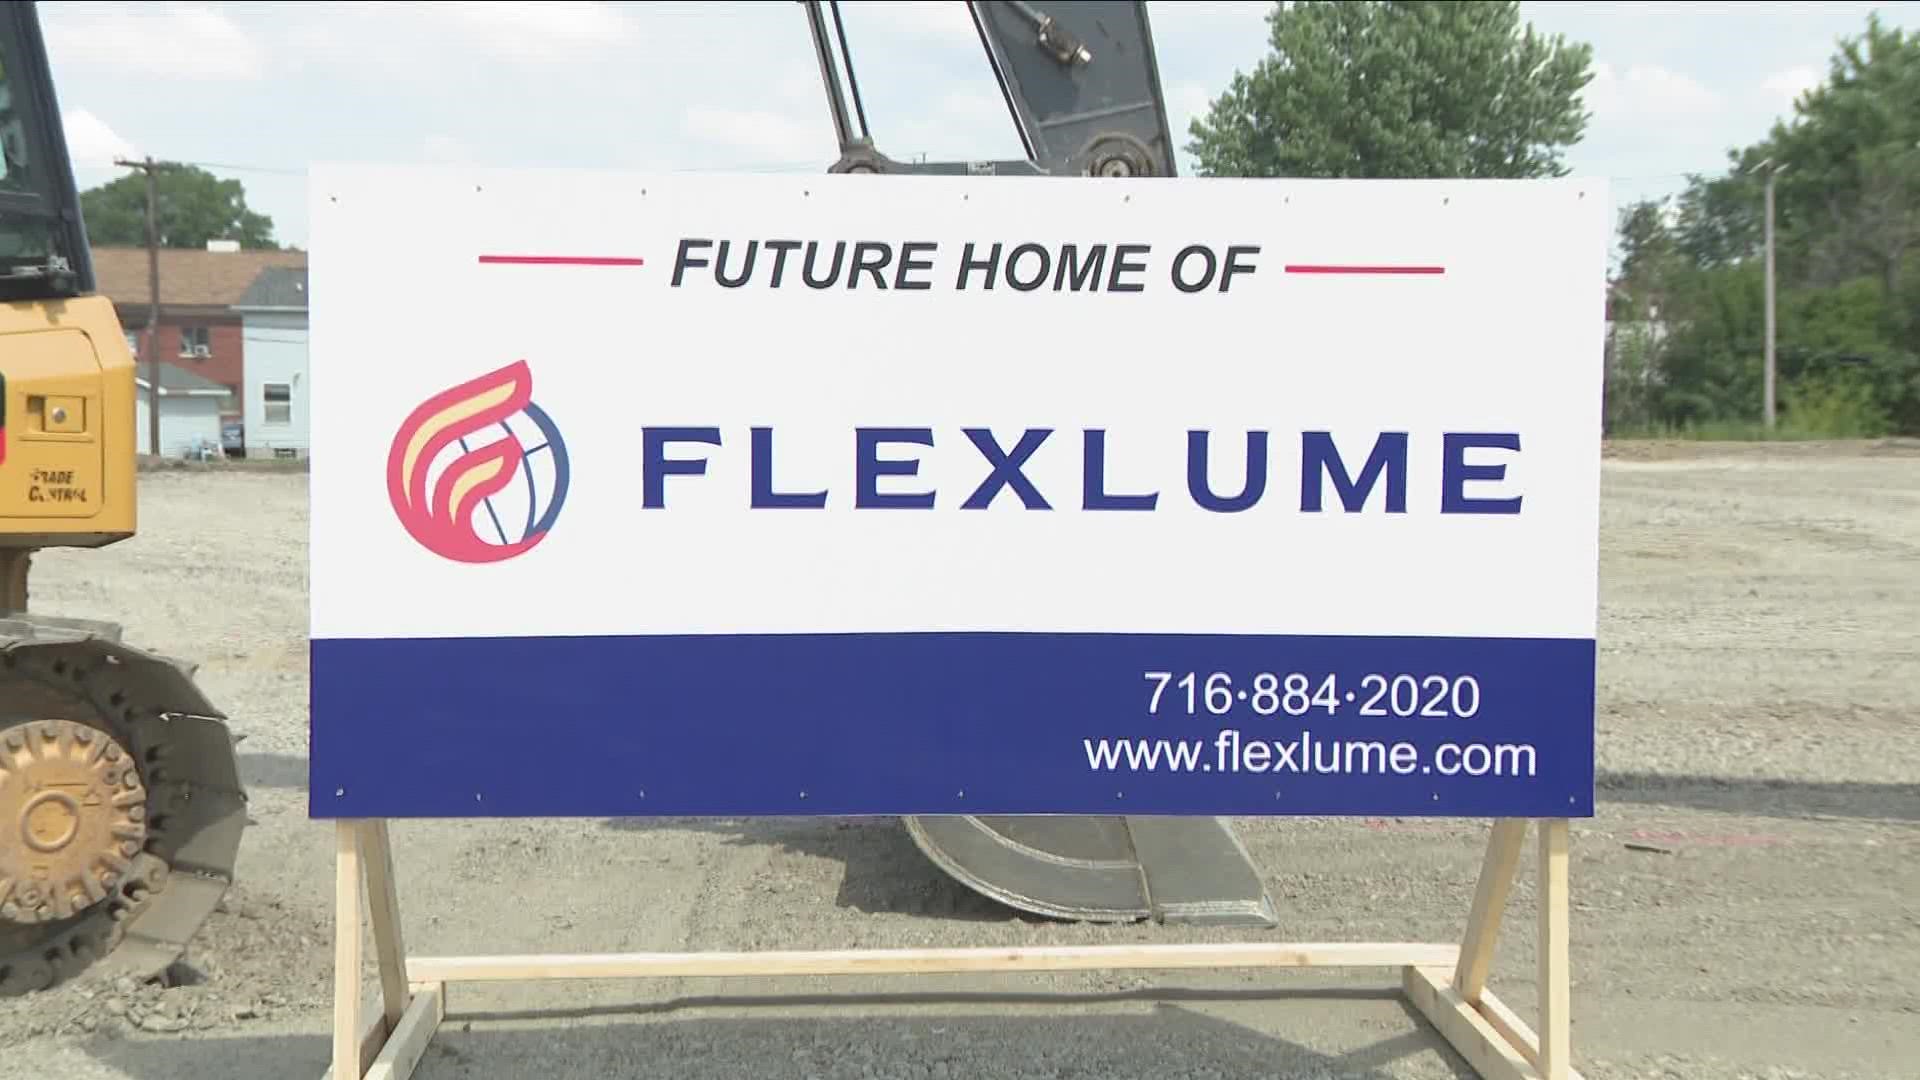 Flexlume will move from Buffalo to Lackawanna next year.